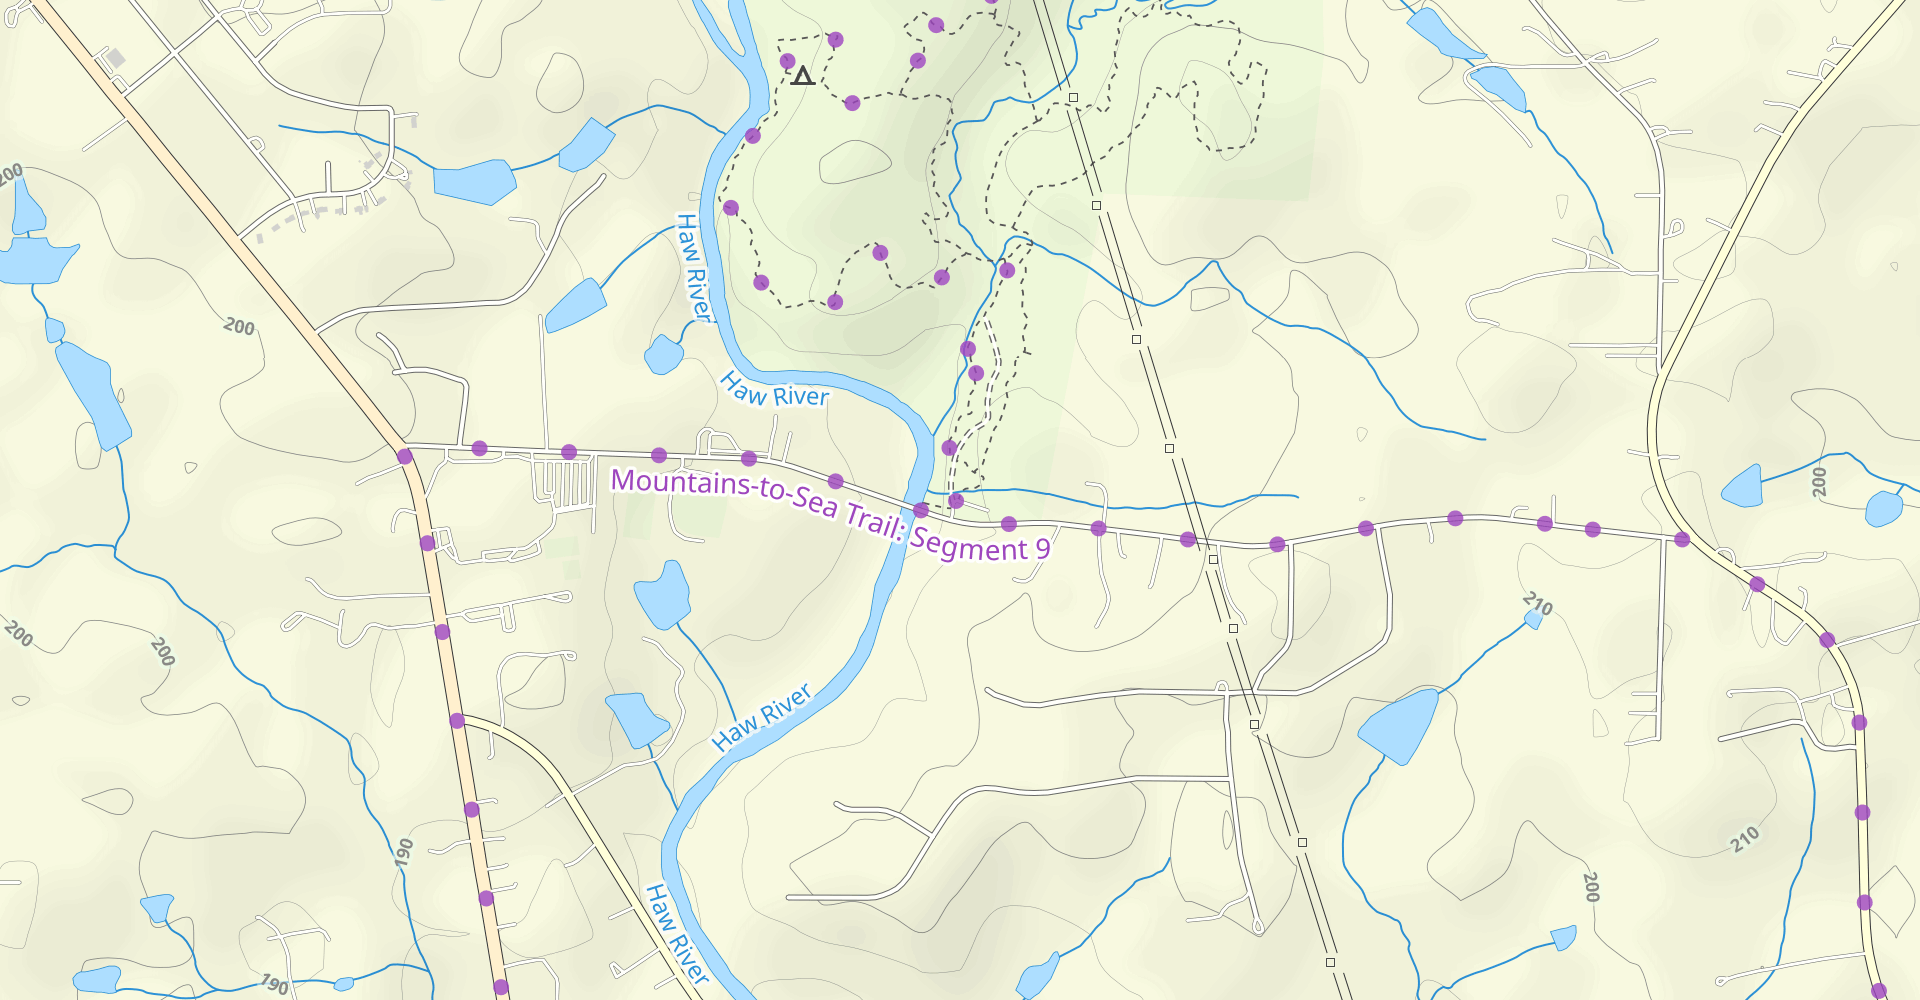 Basin Creek and Homestead Loop Trails